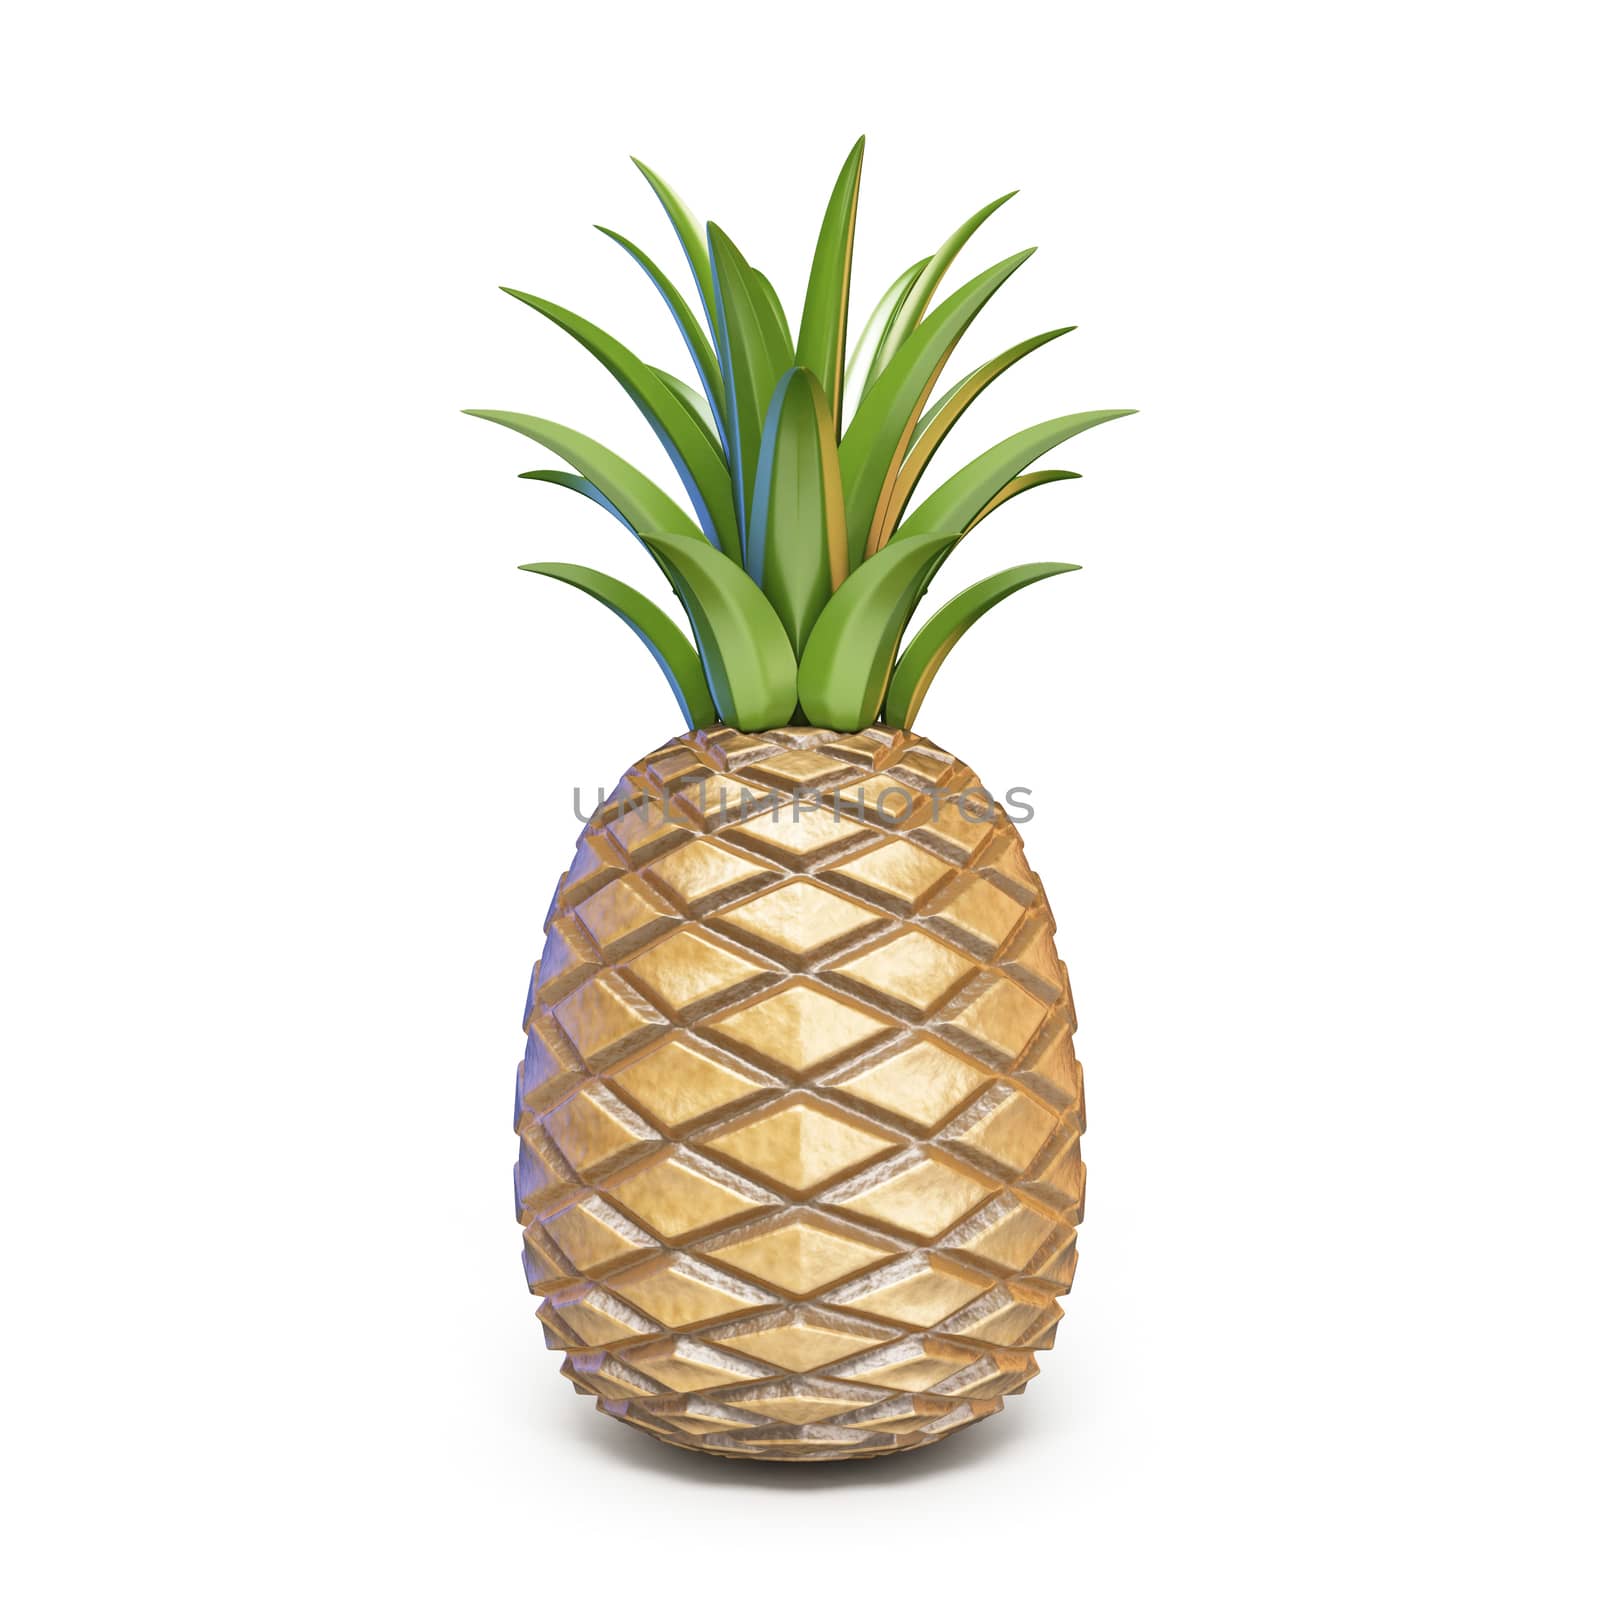 Pineapple 3D rendering illustration on white background by djmilic